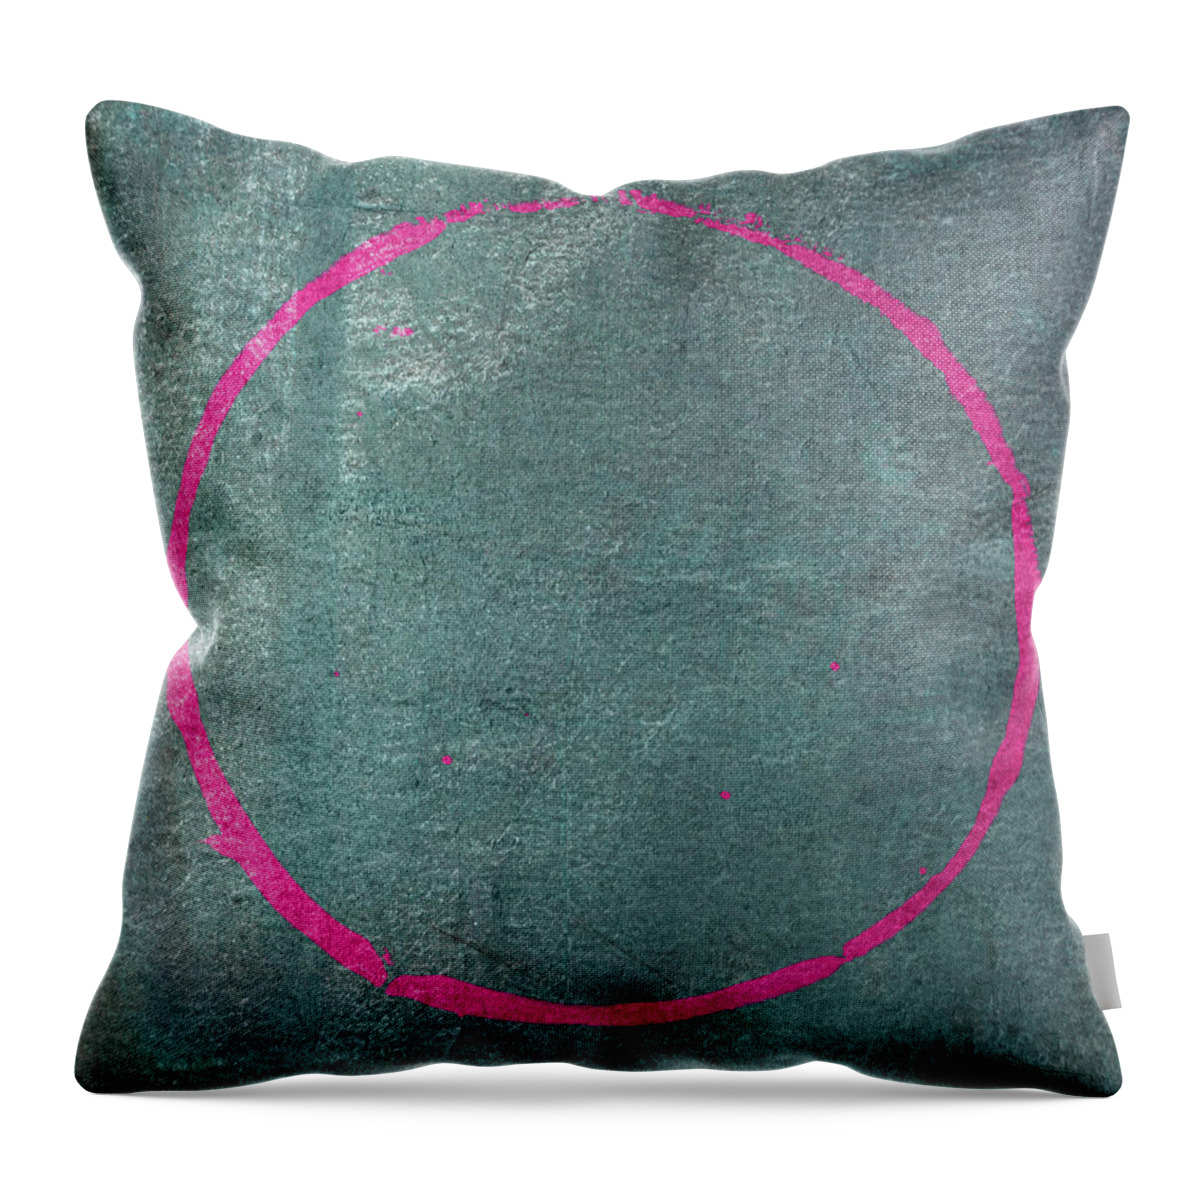 Pink Throw Pillow featuring the digital art Enso 2017-23 by Julie Niemela